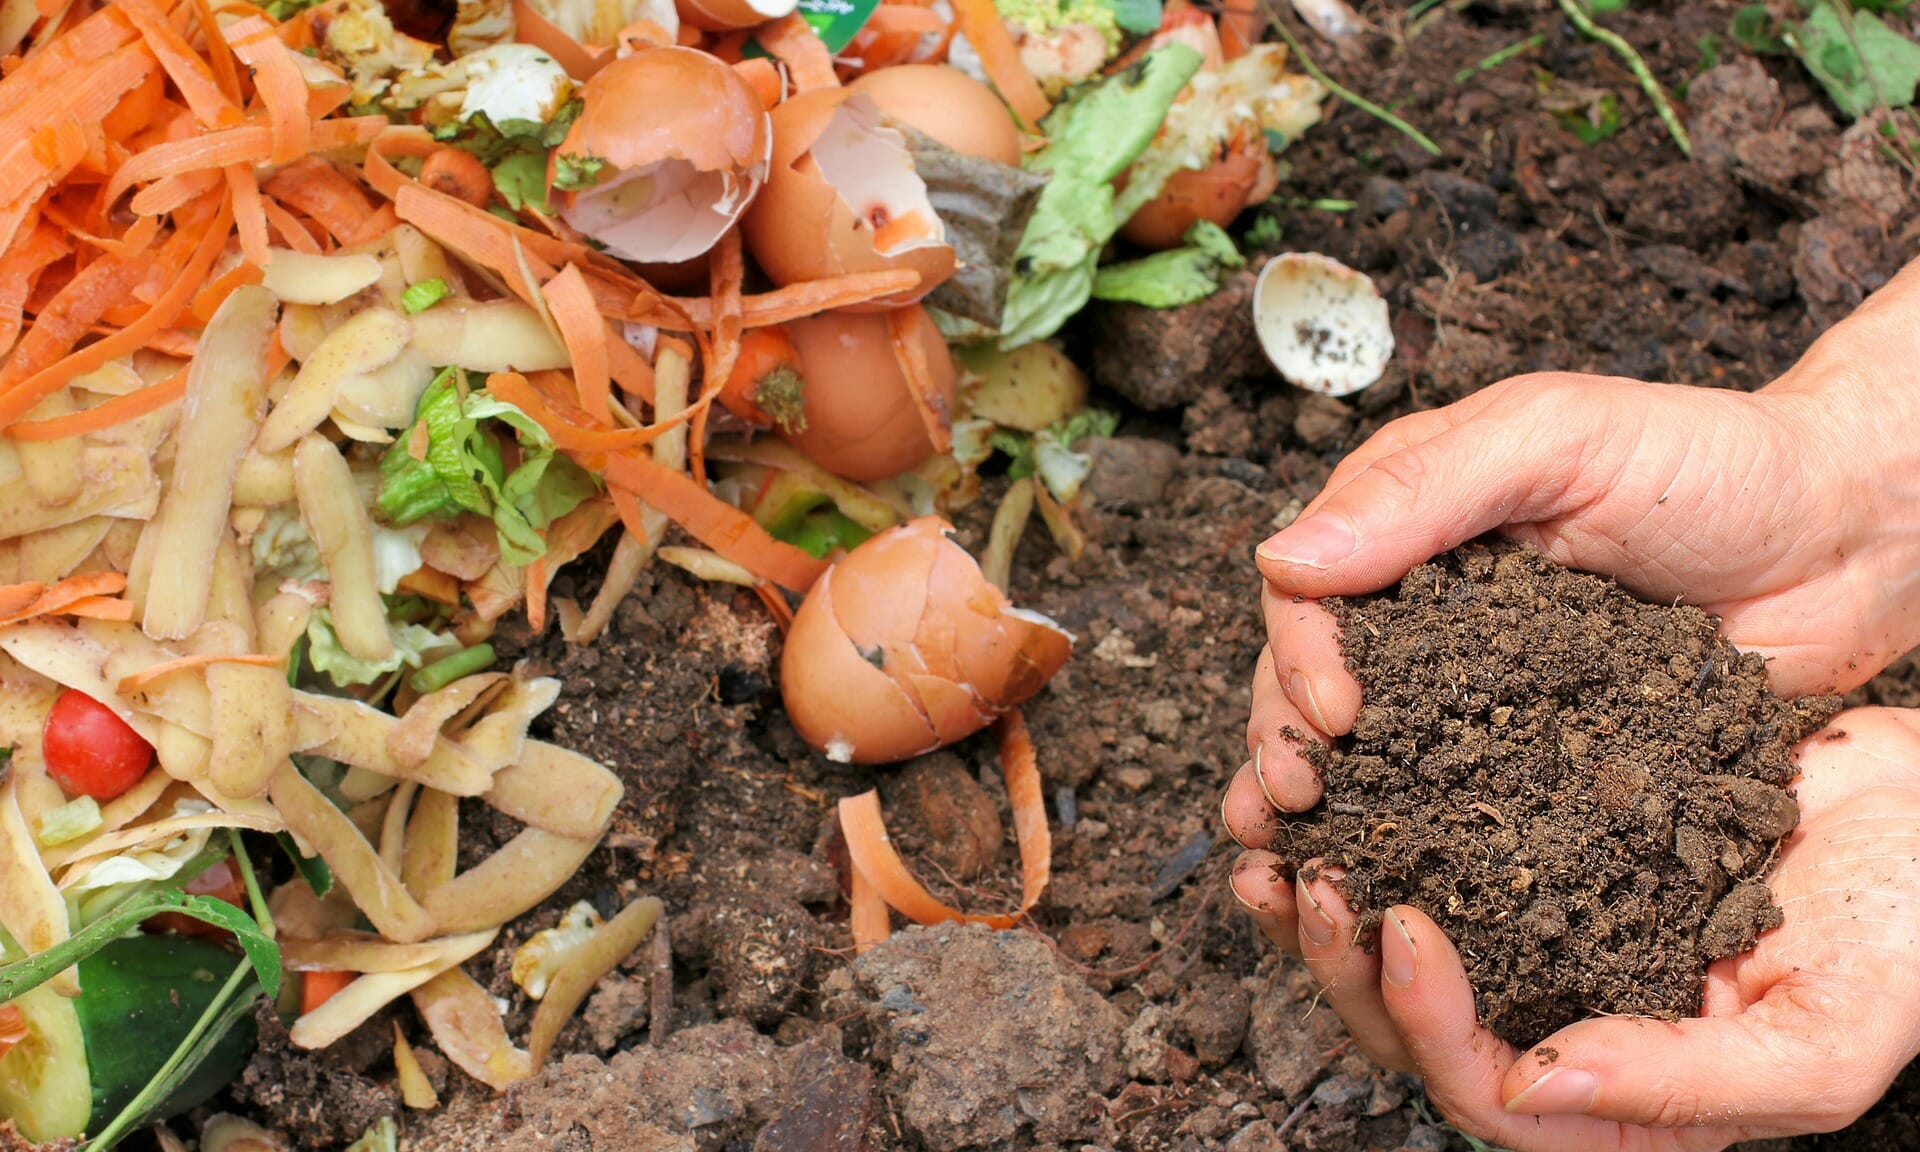 Organics & Food Waste at Home